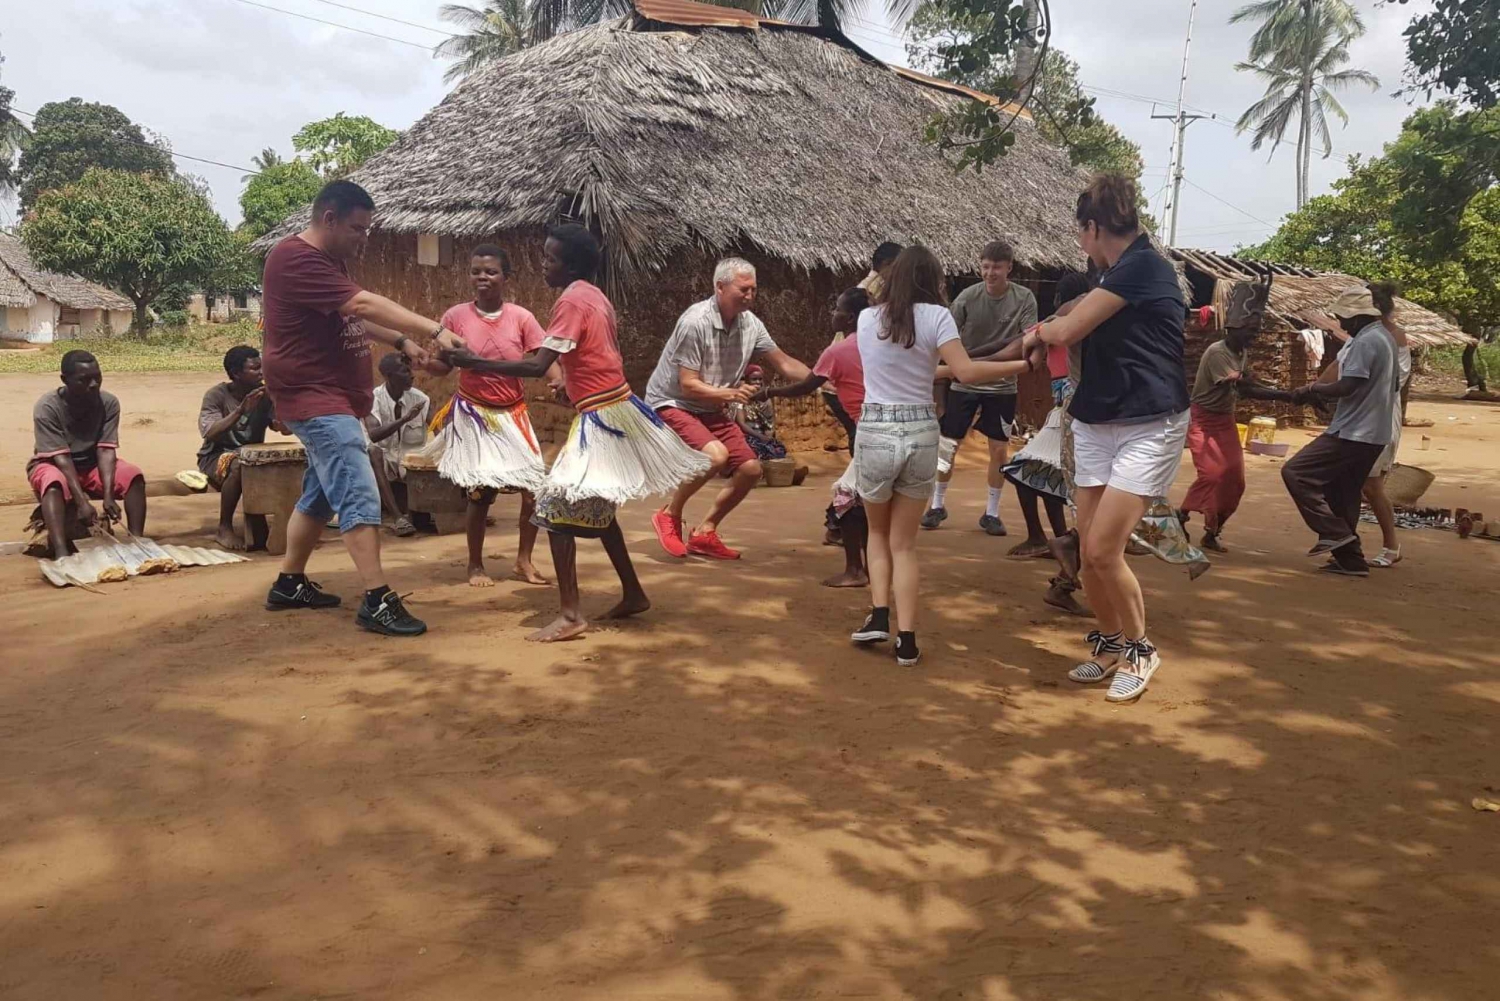 Diani: Giriama Cultural Dance Show and Local Village Tour